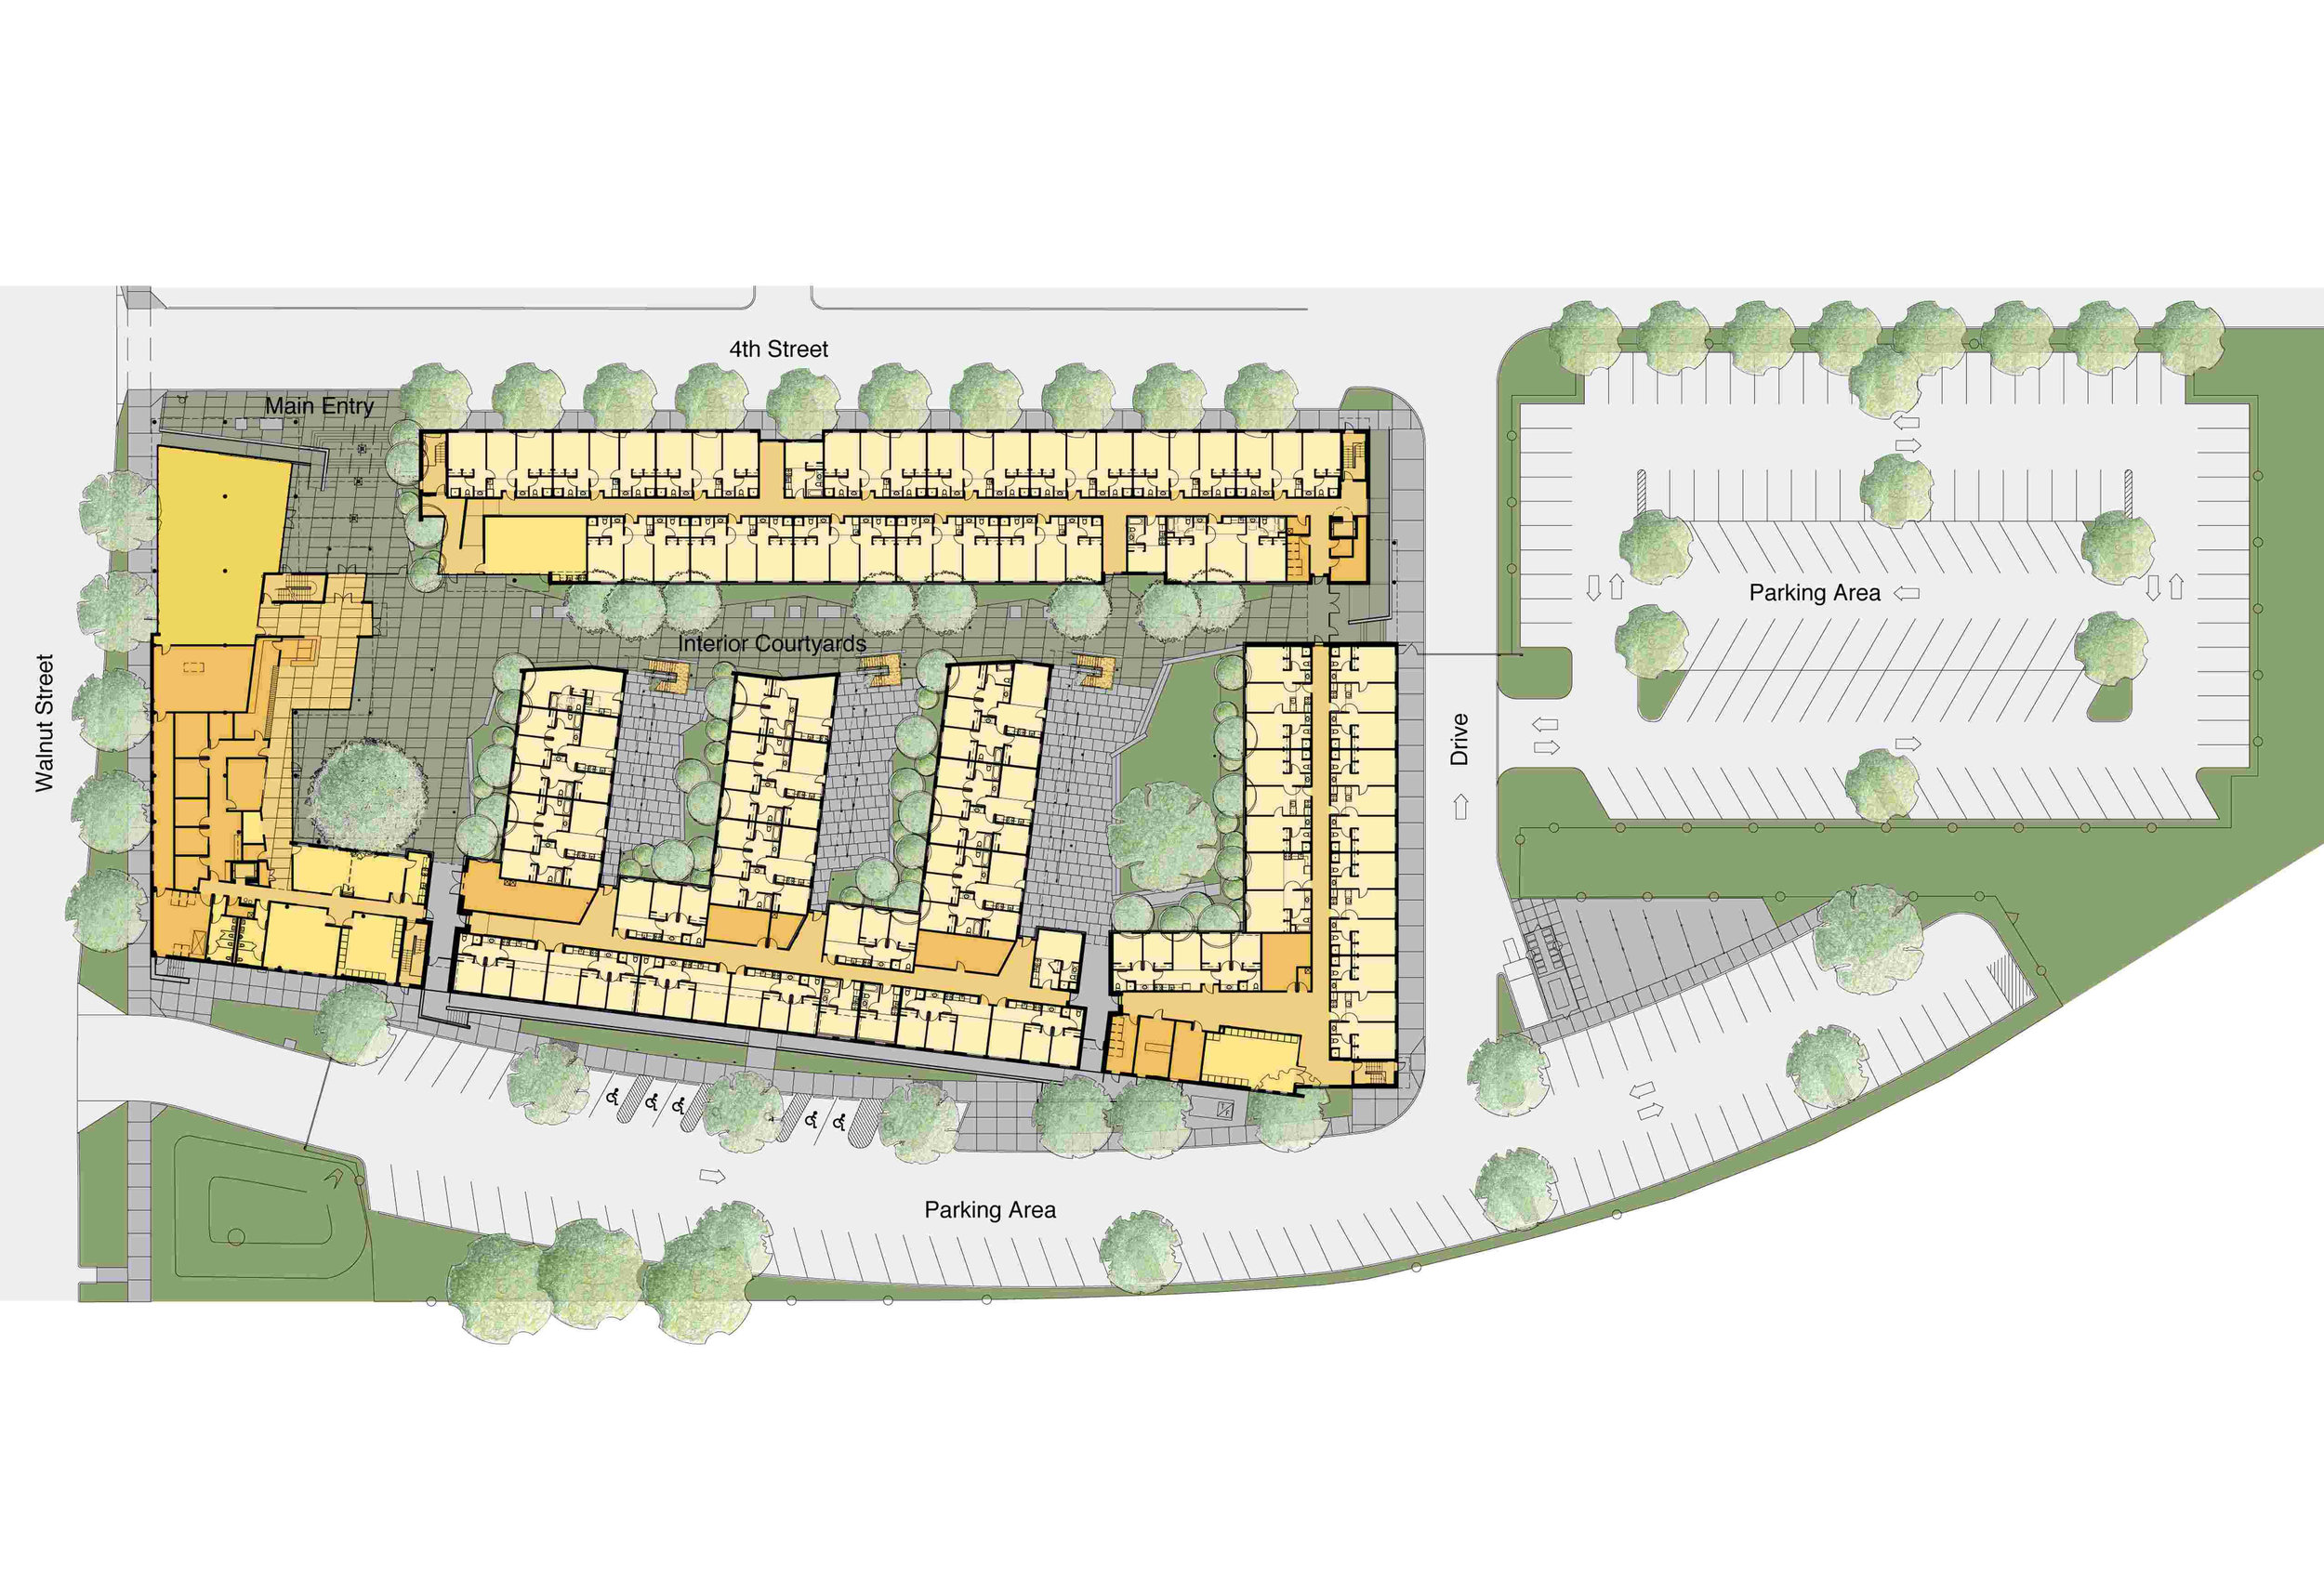 Campus village apartments Site Plan Resized.jpg